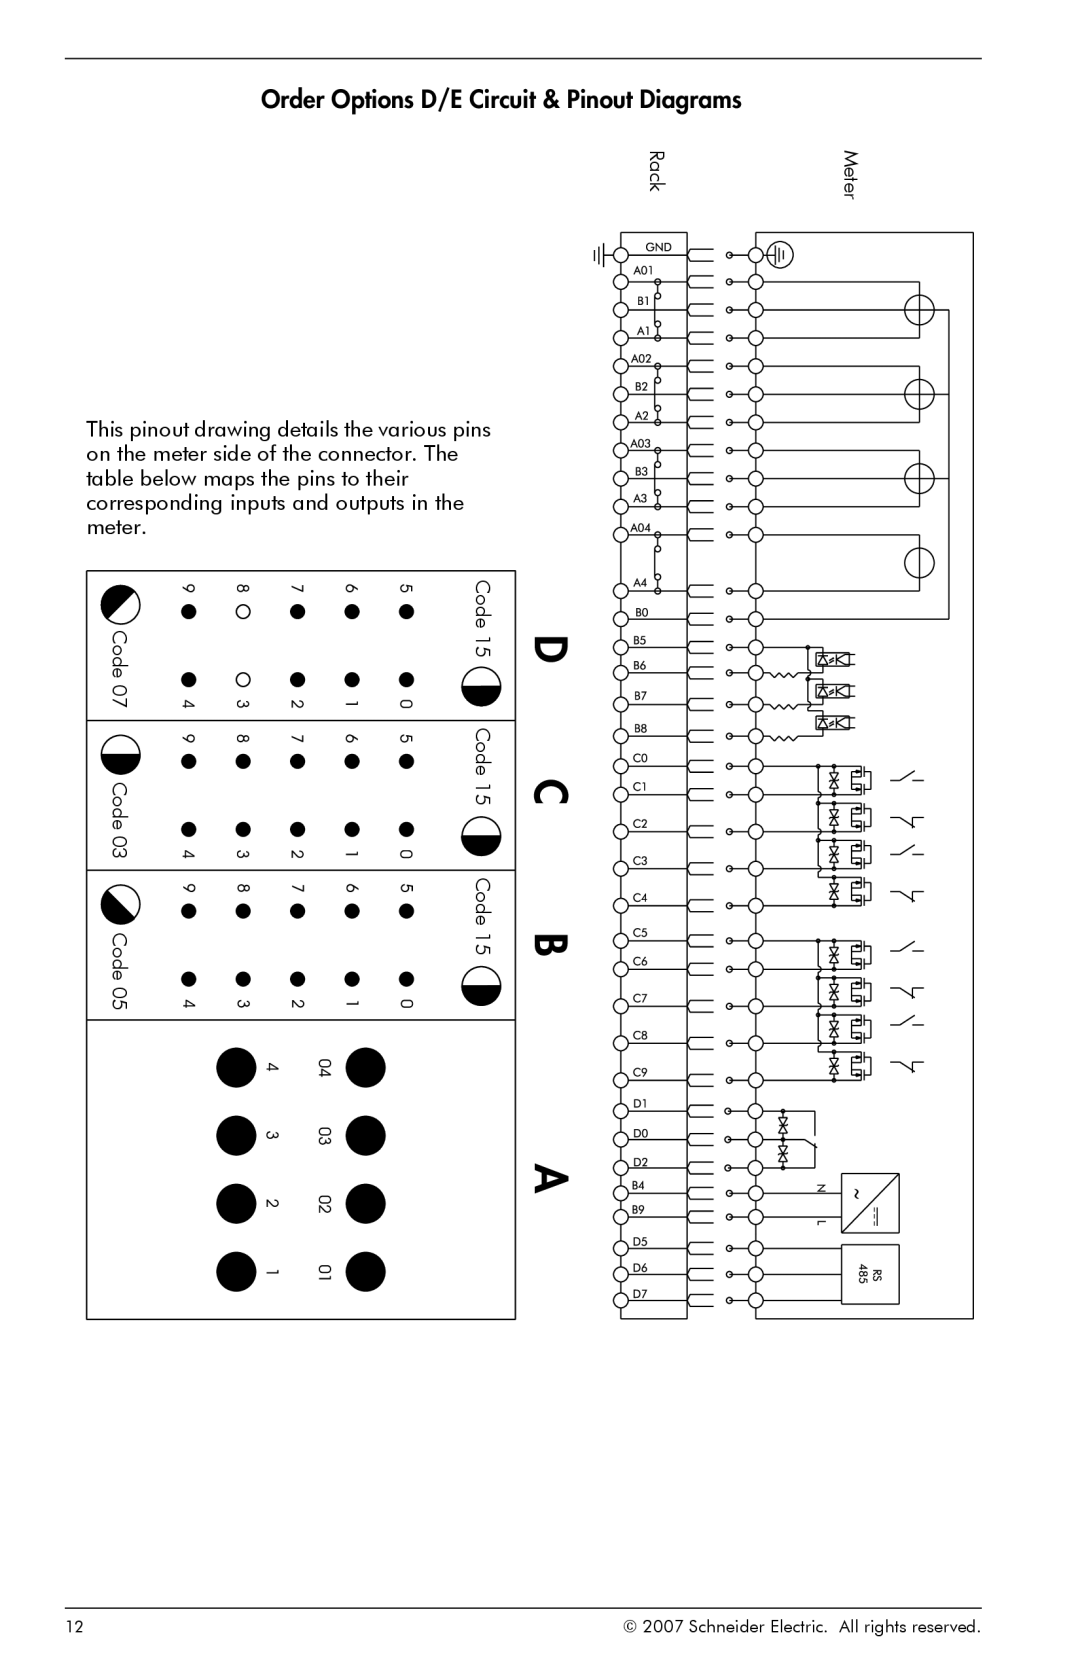 Schneider Electric ION8800 manual D C B A, Order Options D/E Circuit & Pinout Diagrams 